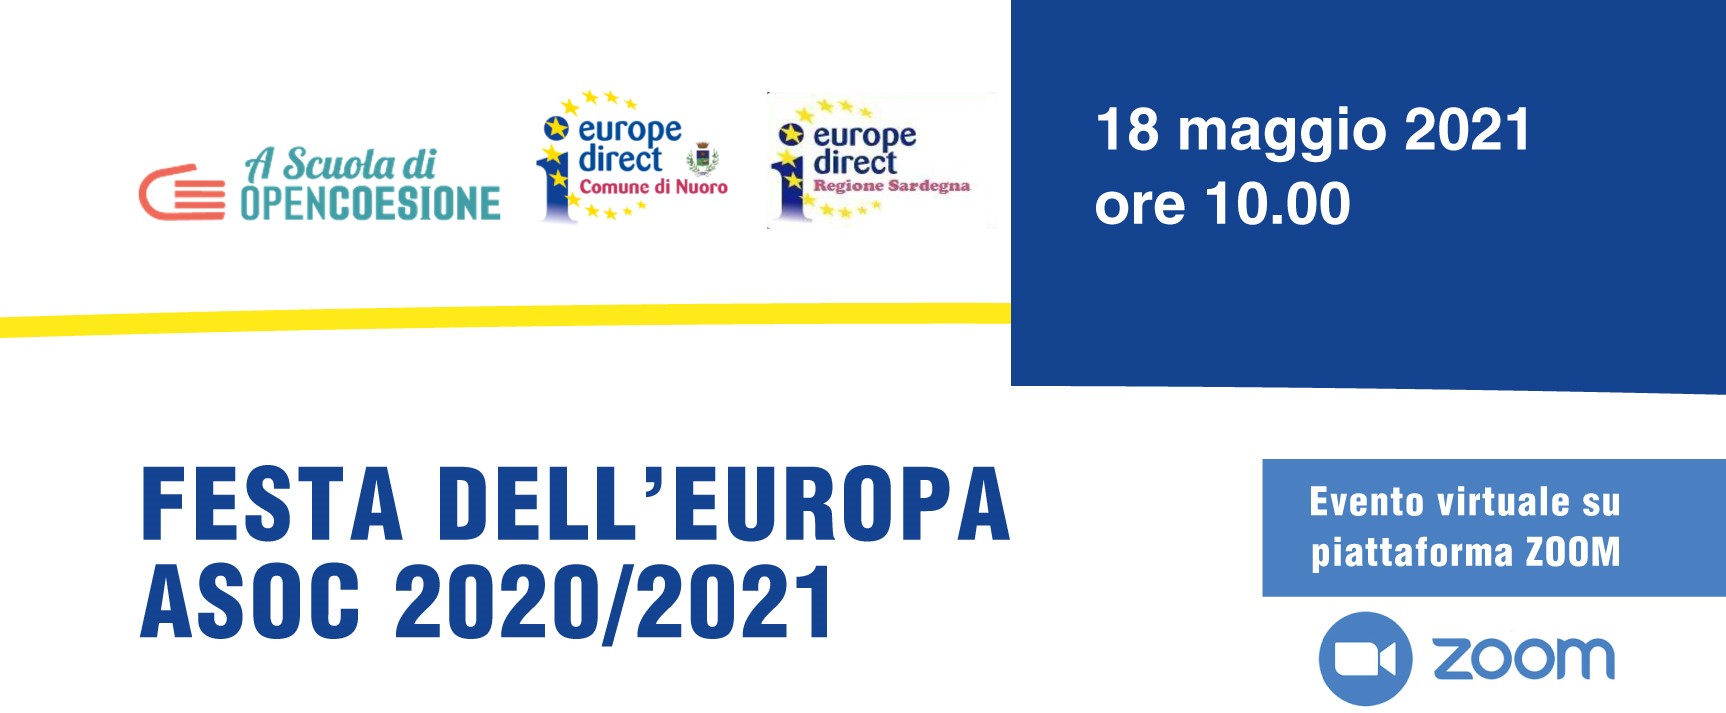 FESTA DELL’EUROPA ASOC 2020/2021